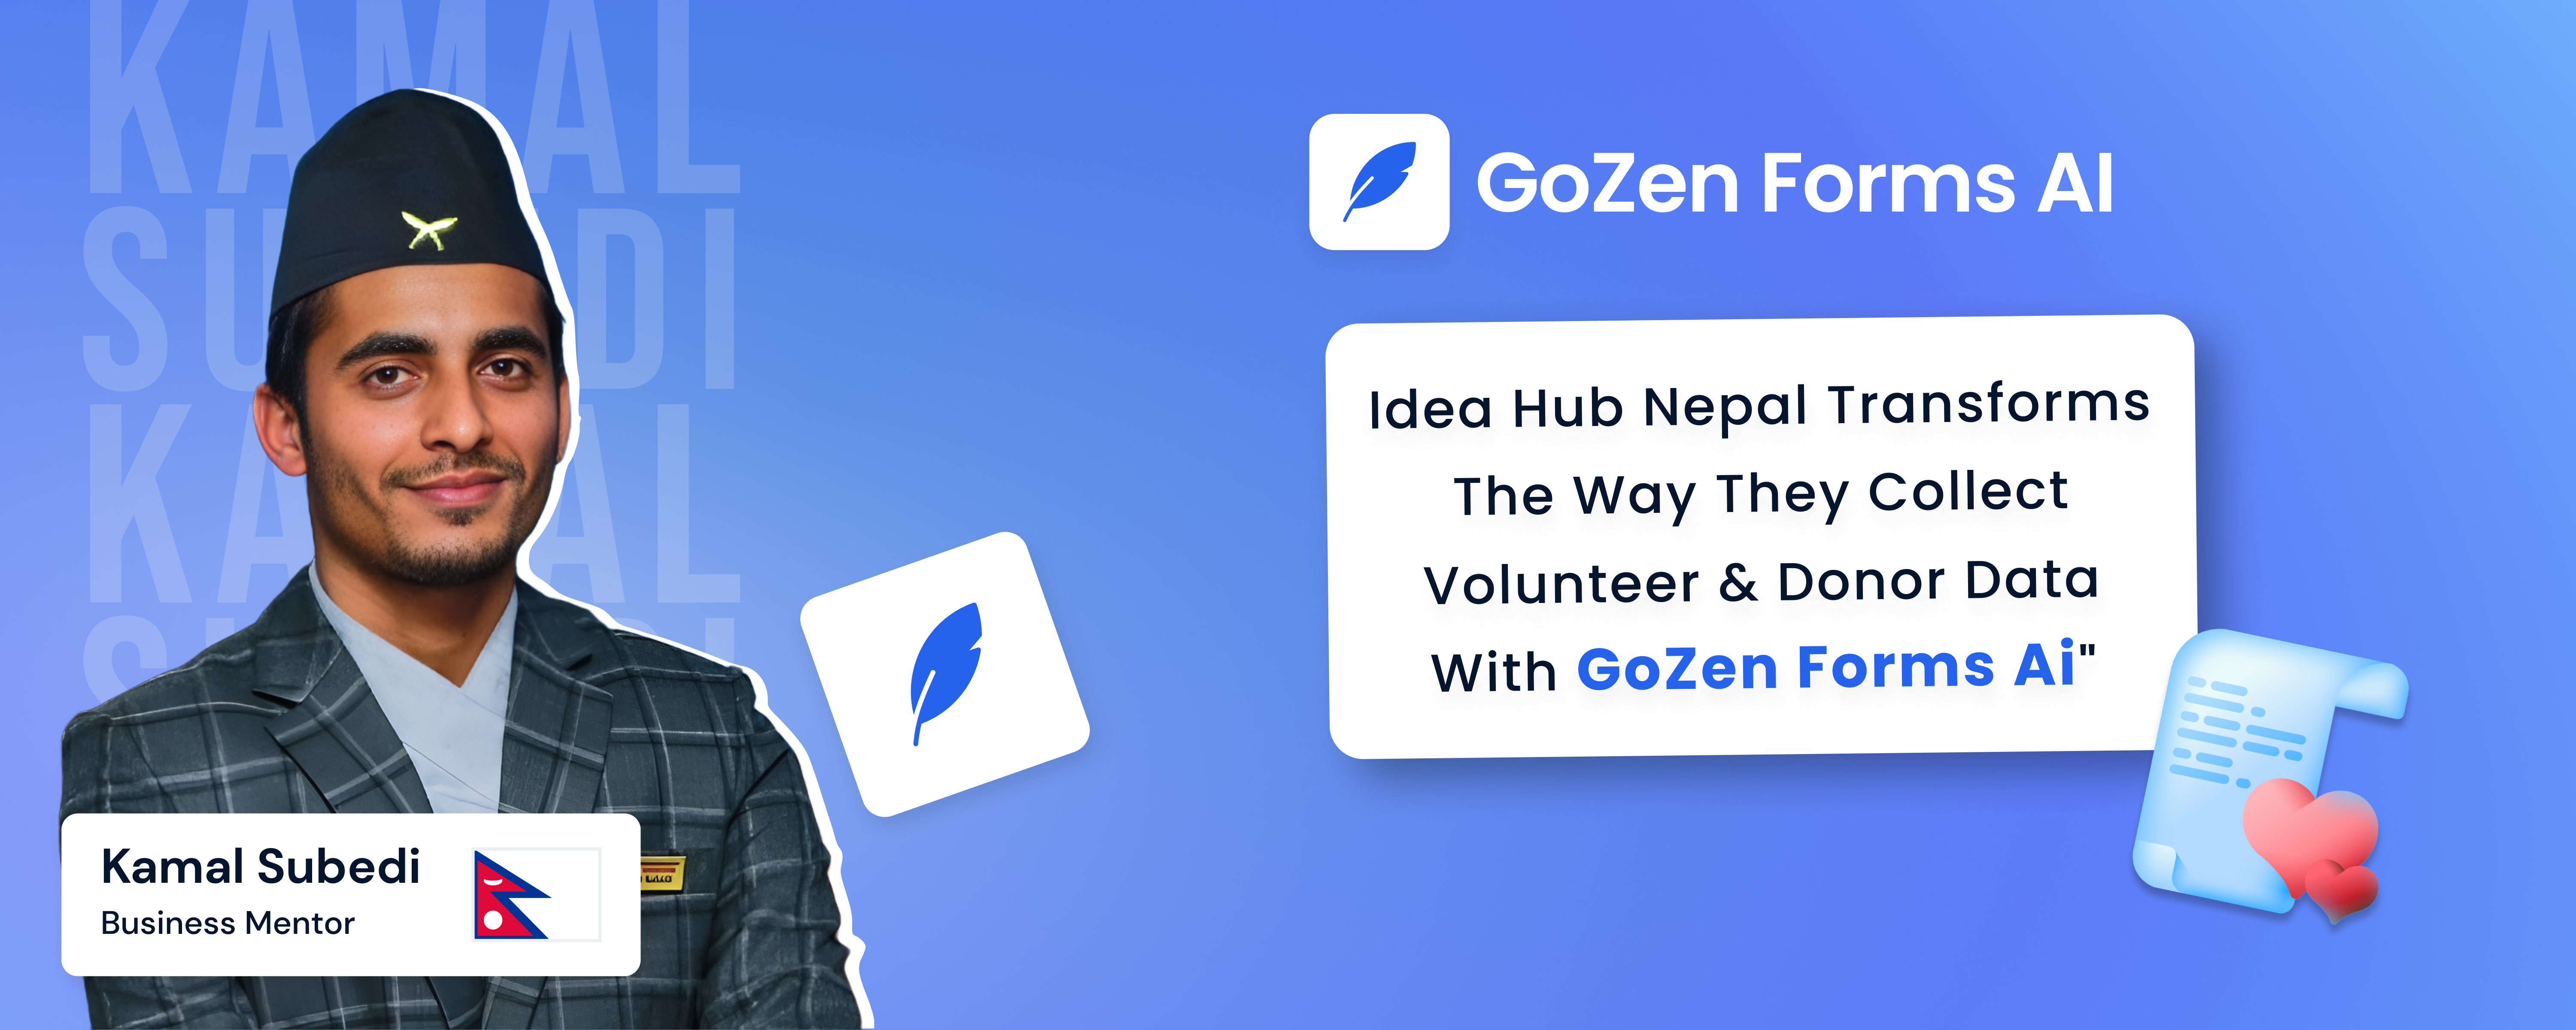 Case Study: GoZen Forms Transformed Idea Hub Nepal's Data Collection